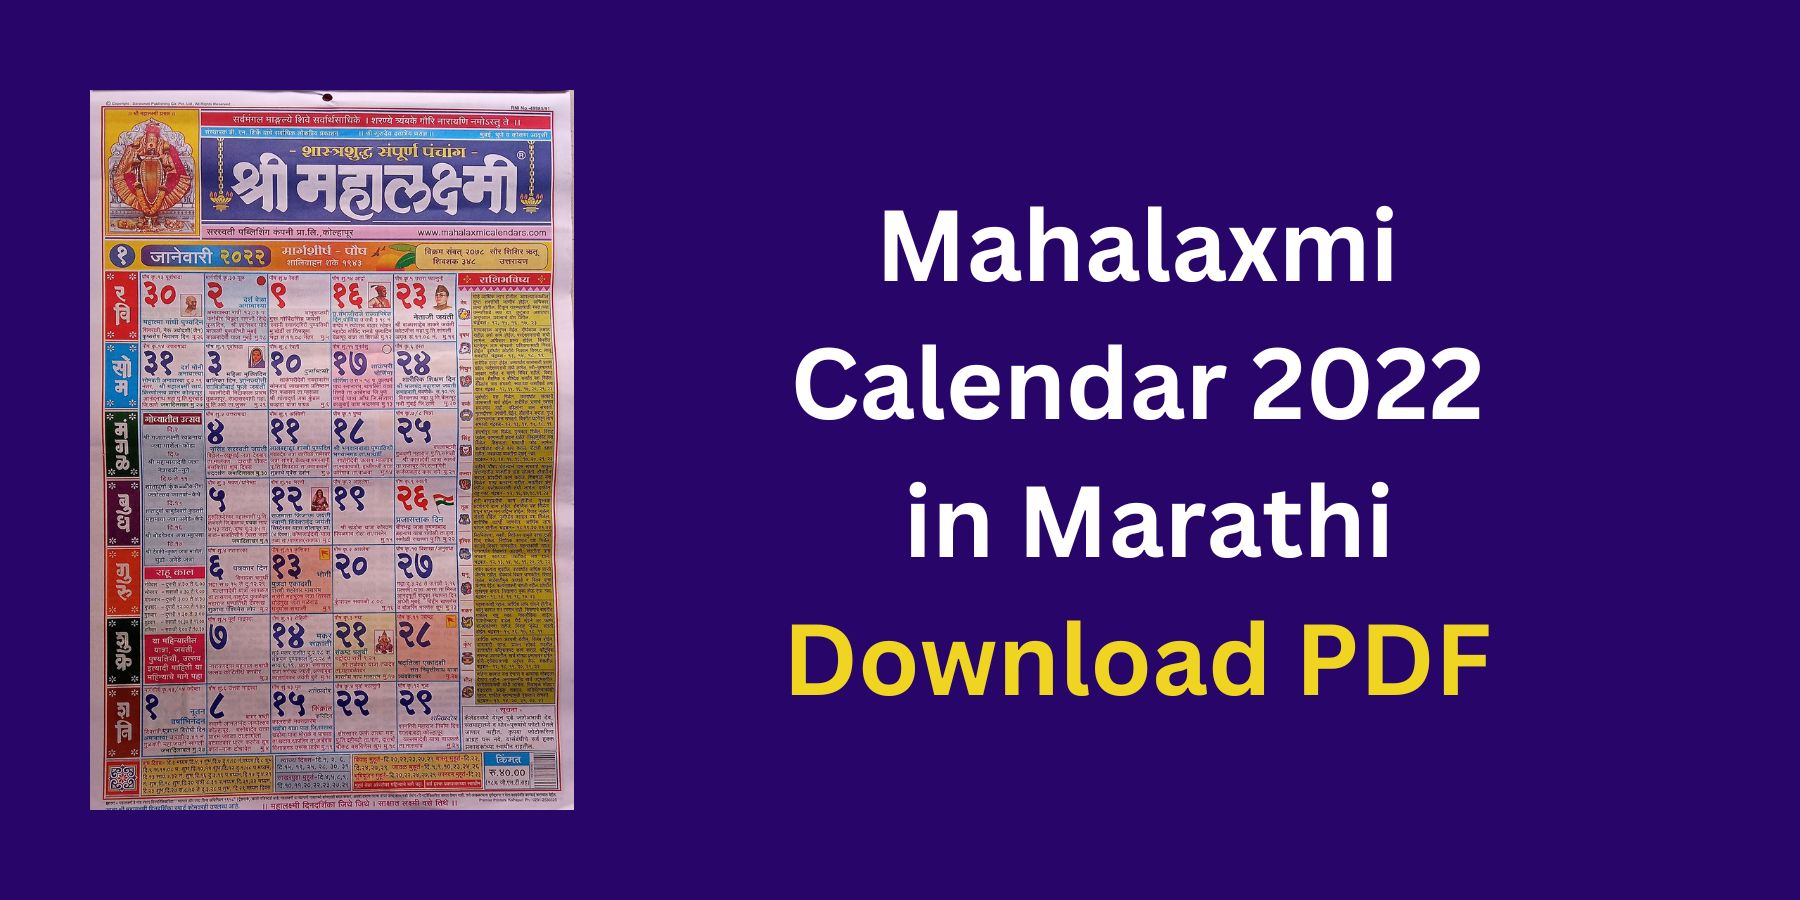 Download Mahalaxmi Calendar PDF 2022 in Marathi